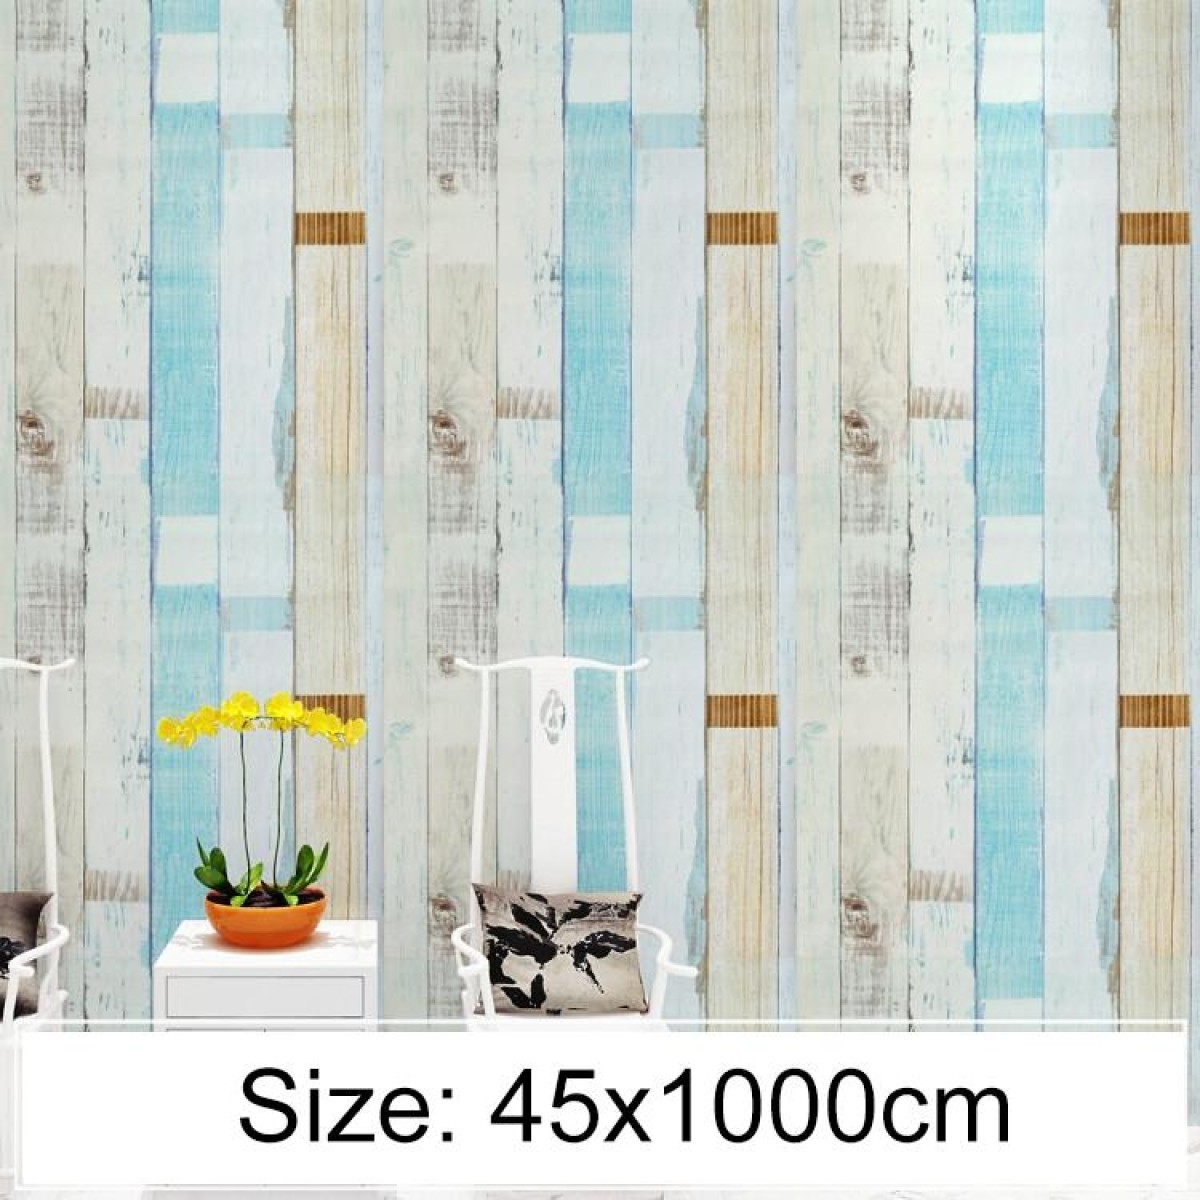 Creative PVC Autohesion Brick Decoration Wallpaper Stickers Bedroom Living Room Wall Waterproof Wallpaper Roll, Size: 45 x 1000cm(Beige)